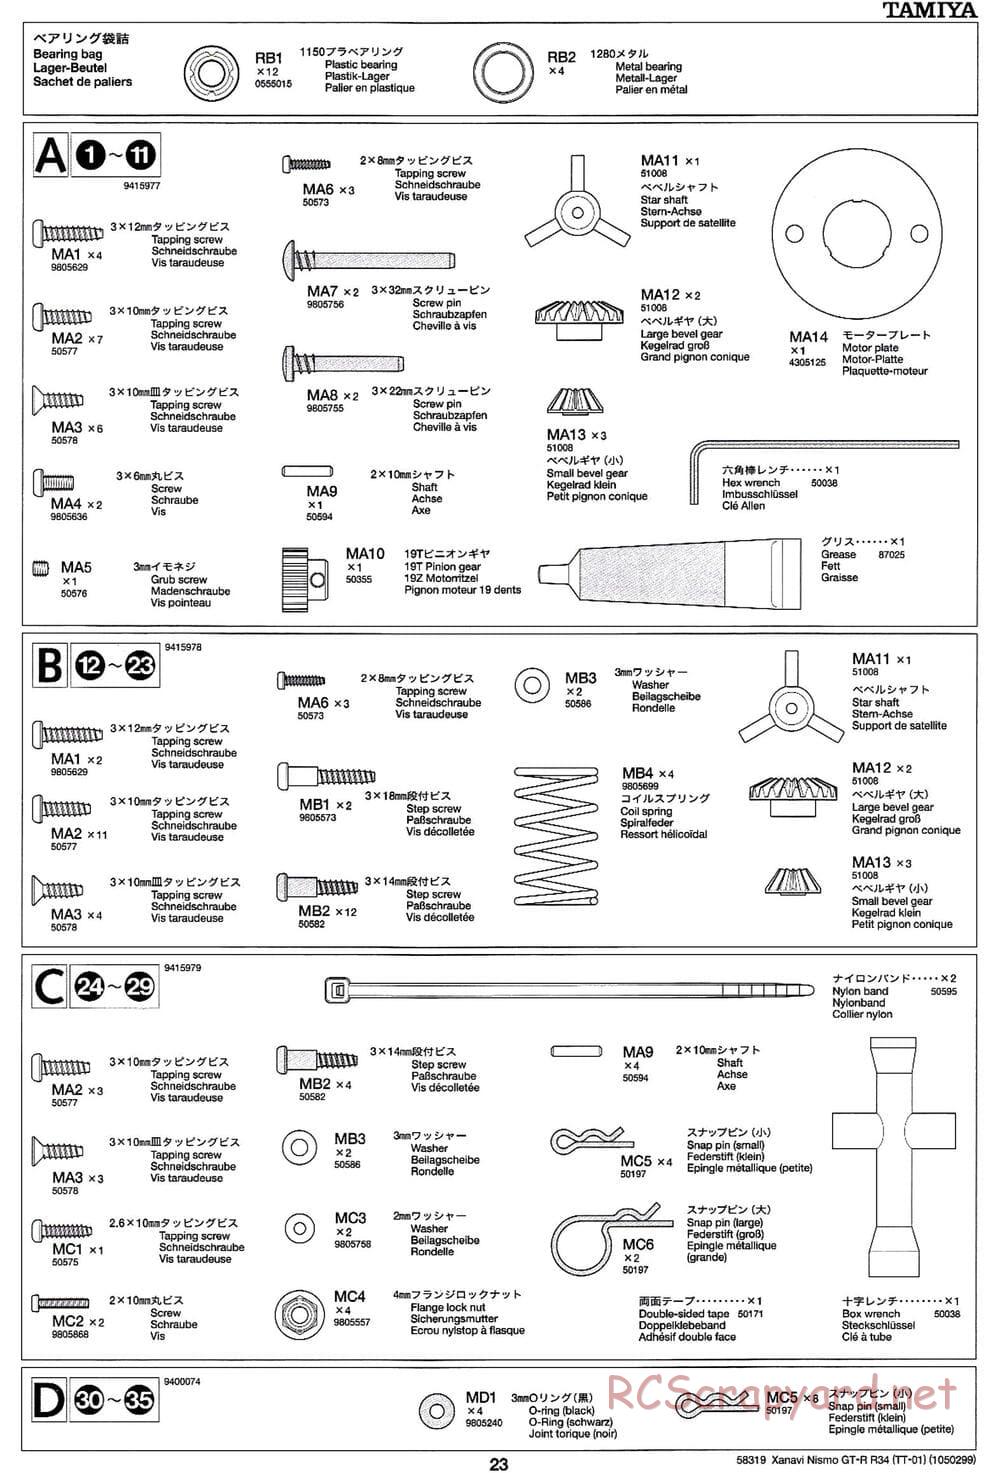 Tamiya - Xanavi Nismo GT-R R34 - TT-01 Chassis - Manual - Page 23